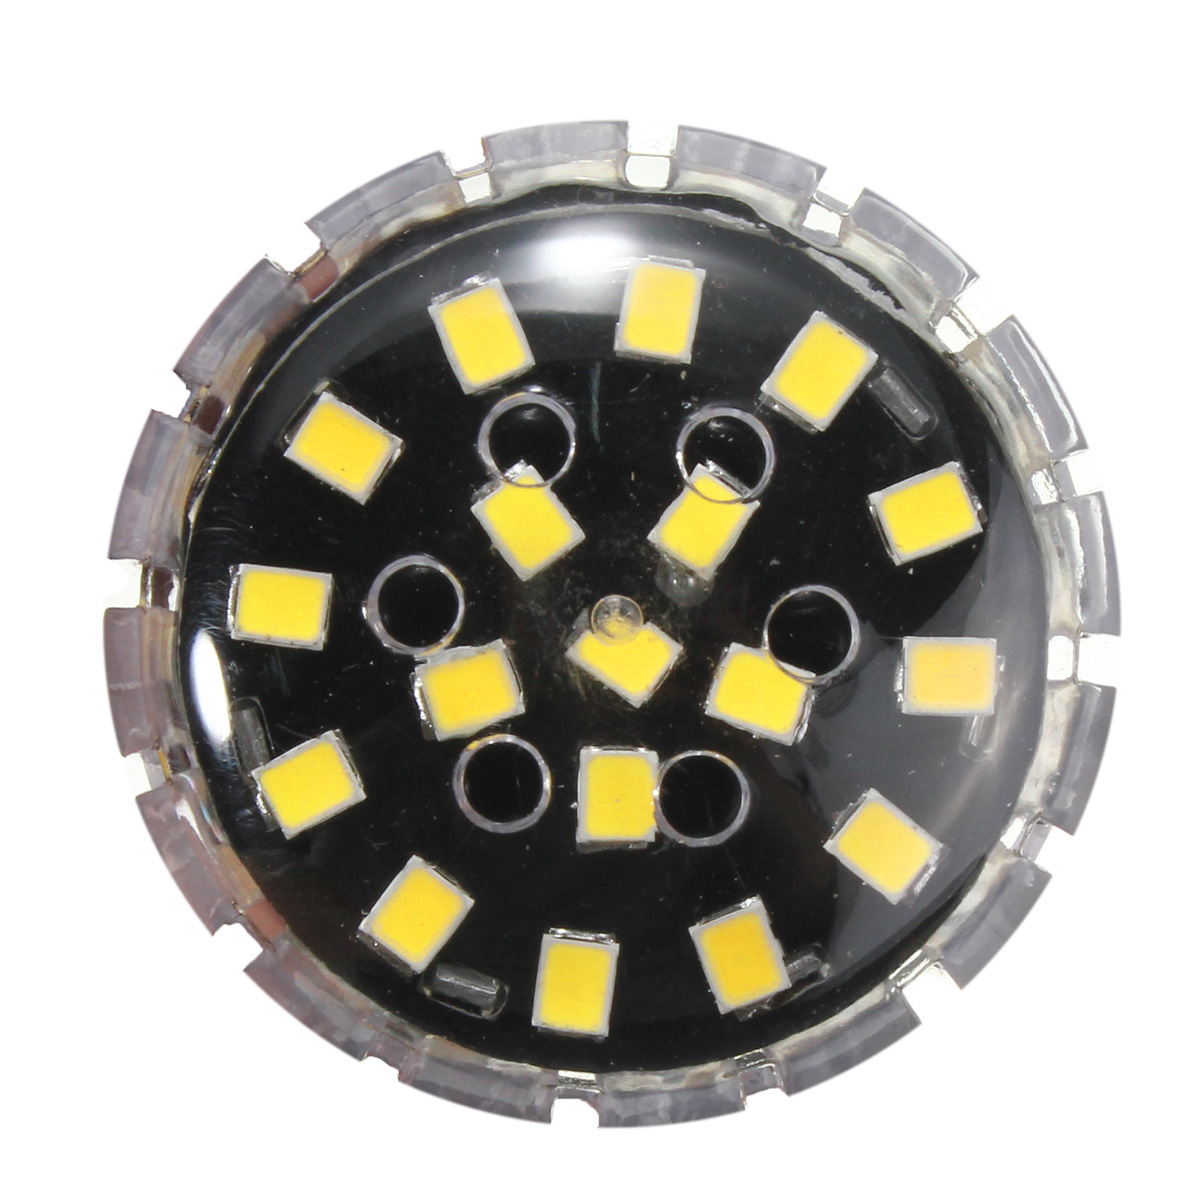 E14-B22-E27-11W-LED-2835-SMD-Warm-White--White-Cover-Corn-Light-Lamp-Bulb-Non-Dimmable-AC-220V-1035834-3